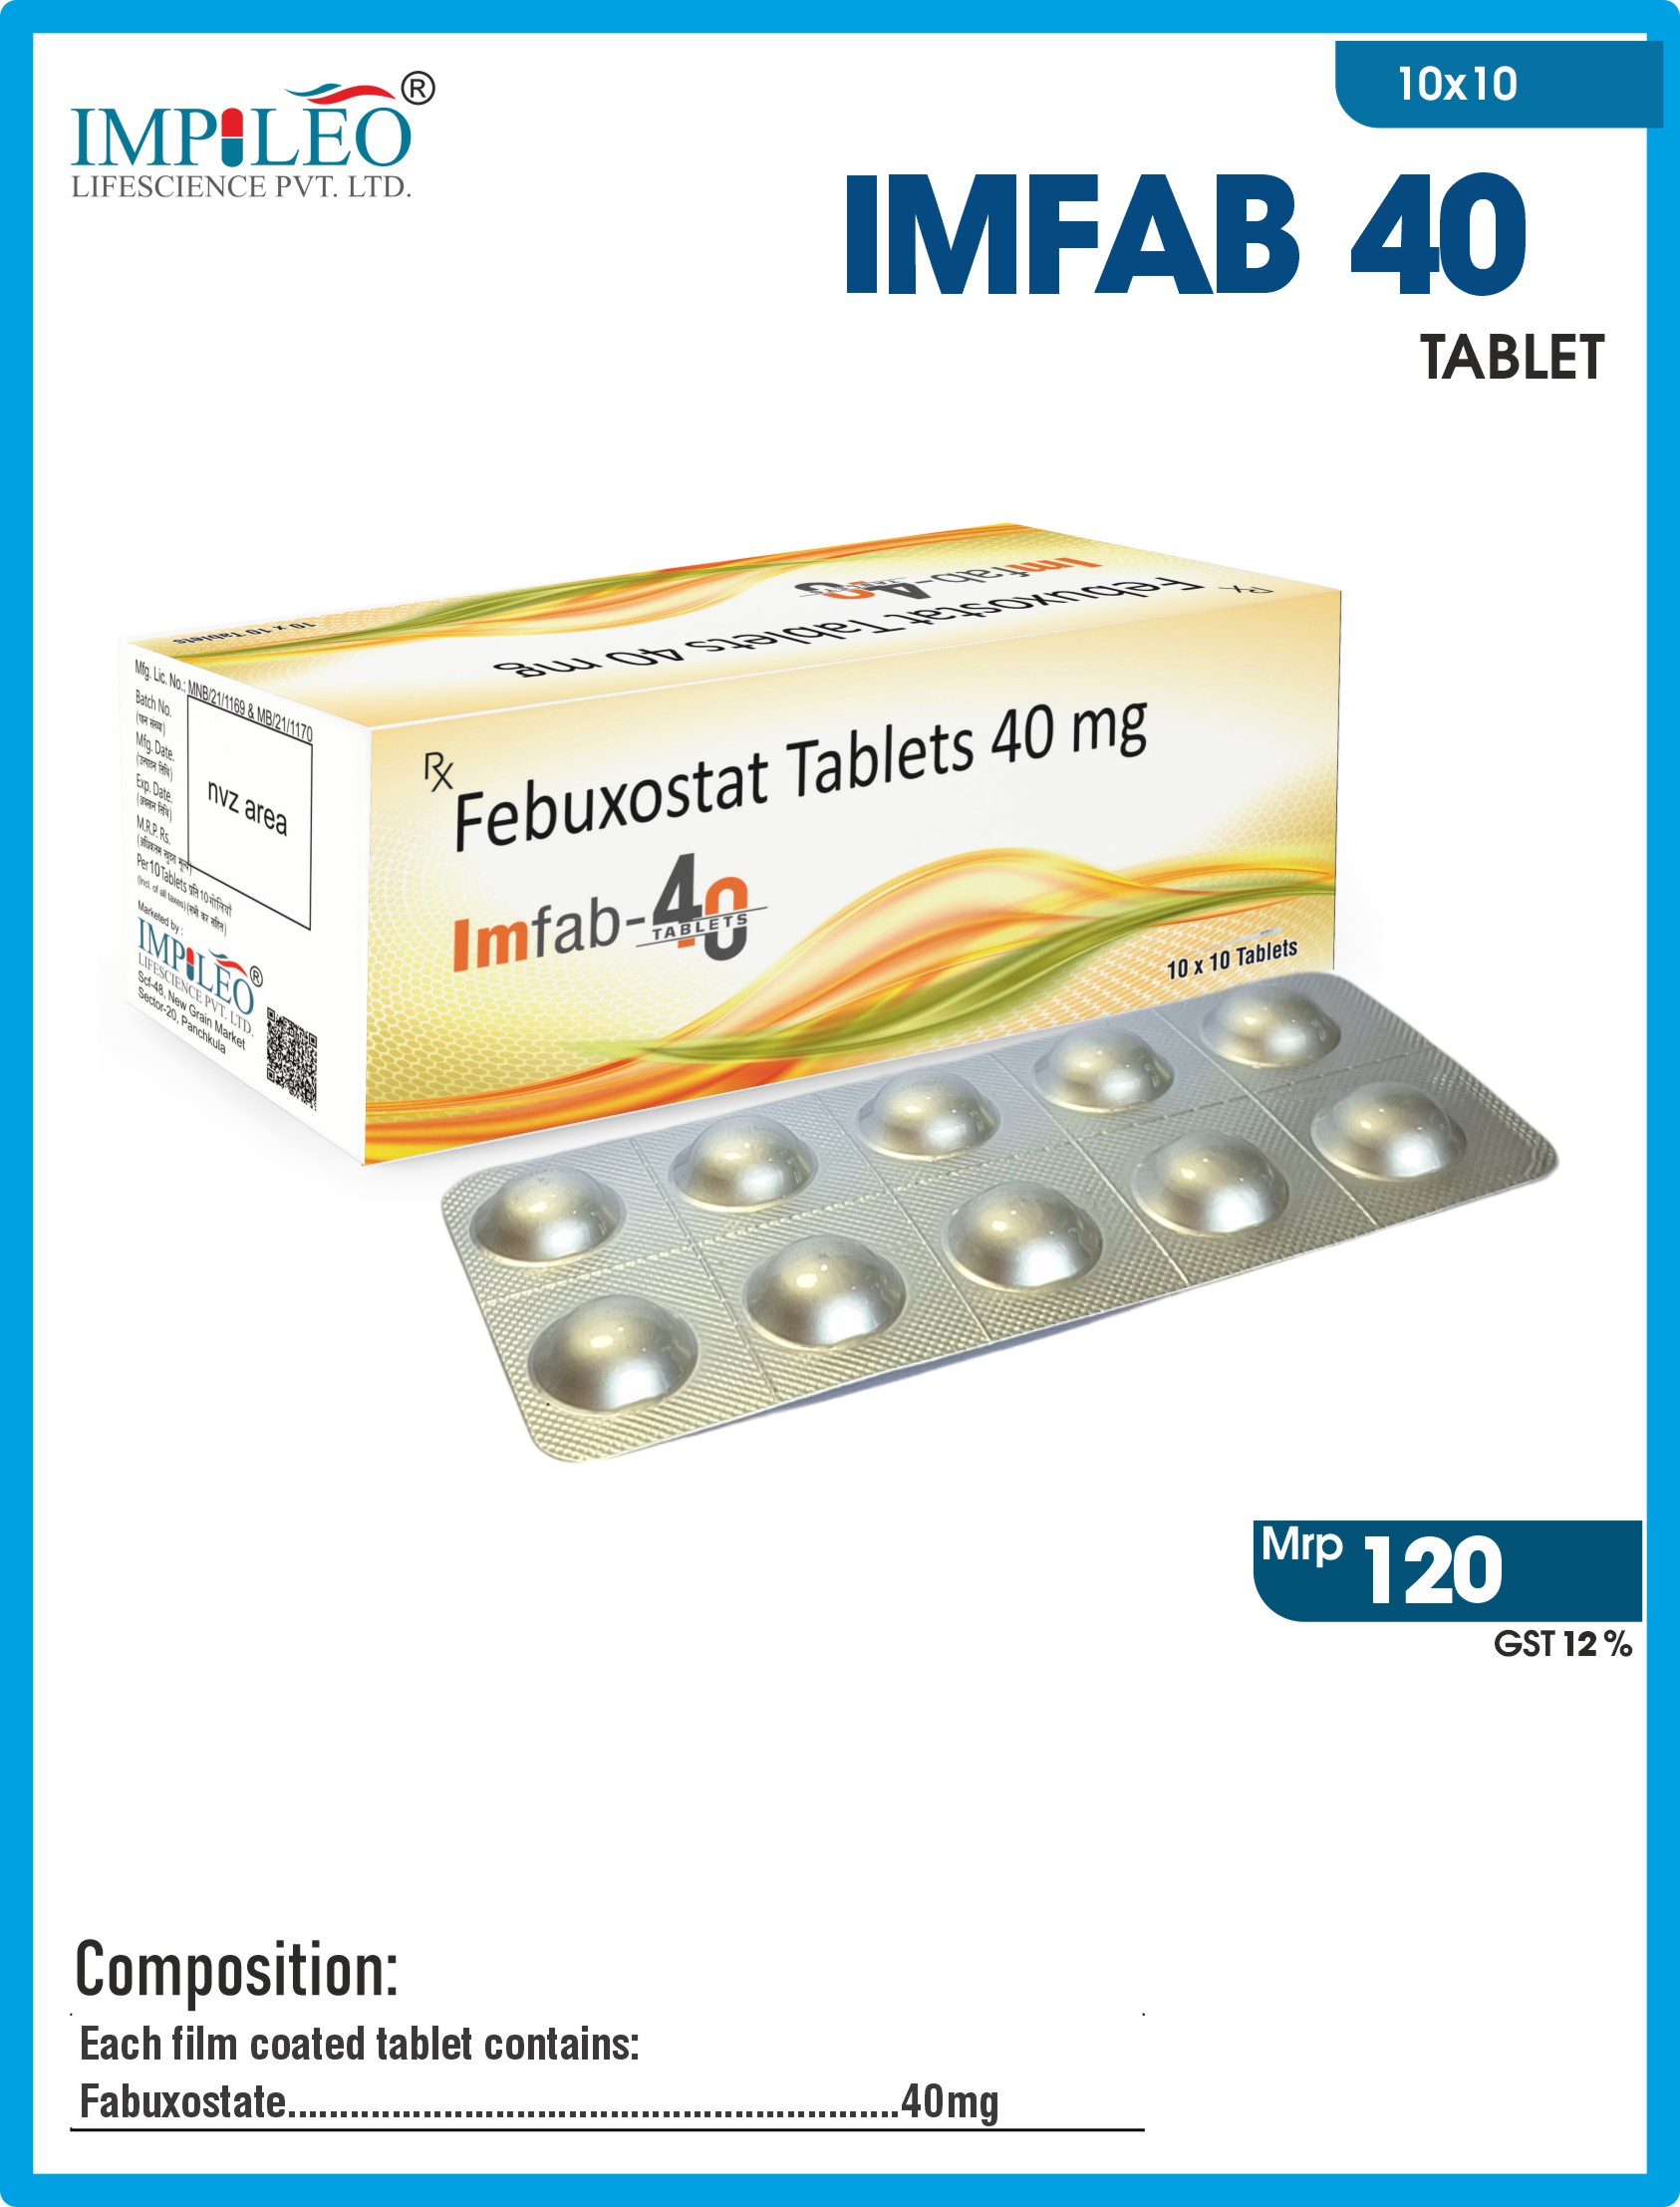 Maximize Profits with Premier PCD Pharma Franchise in Panchkula Offering IMFAB 40 Febuxostat Tablets